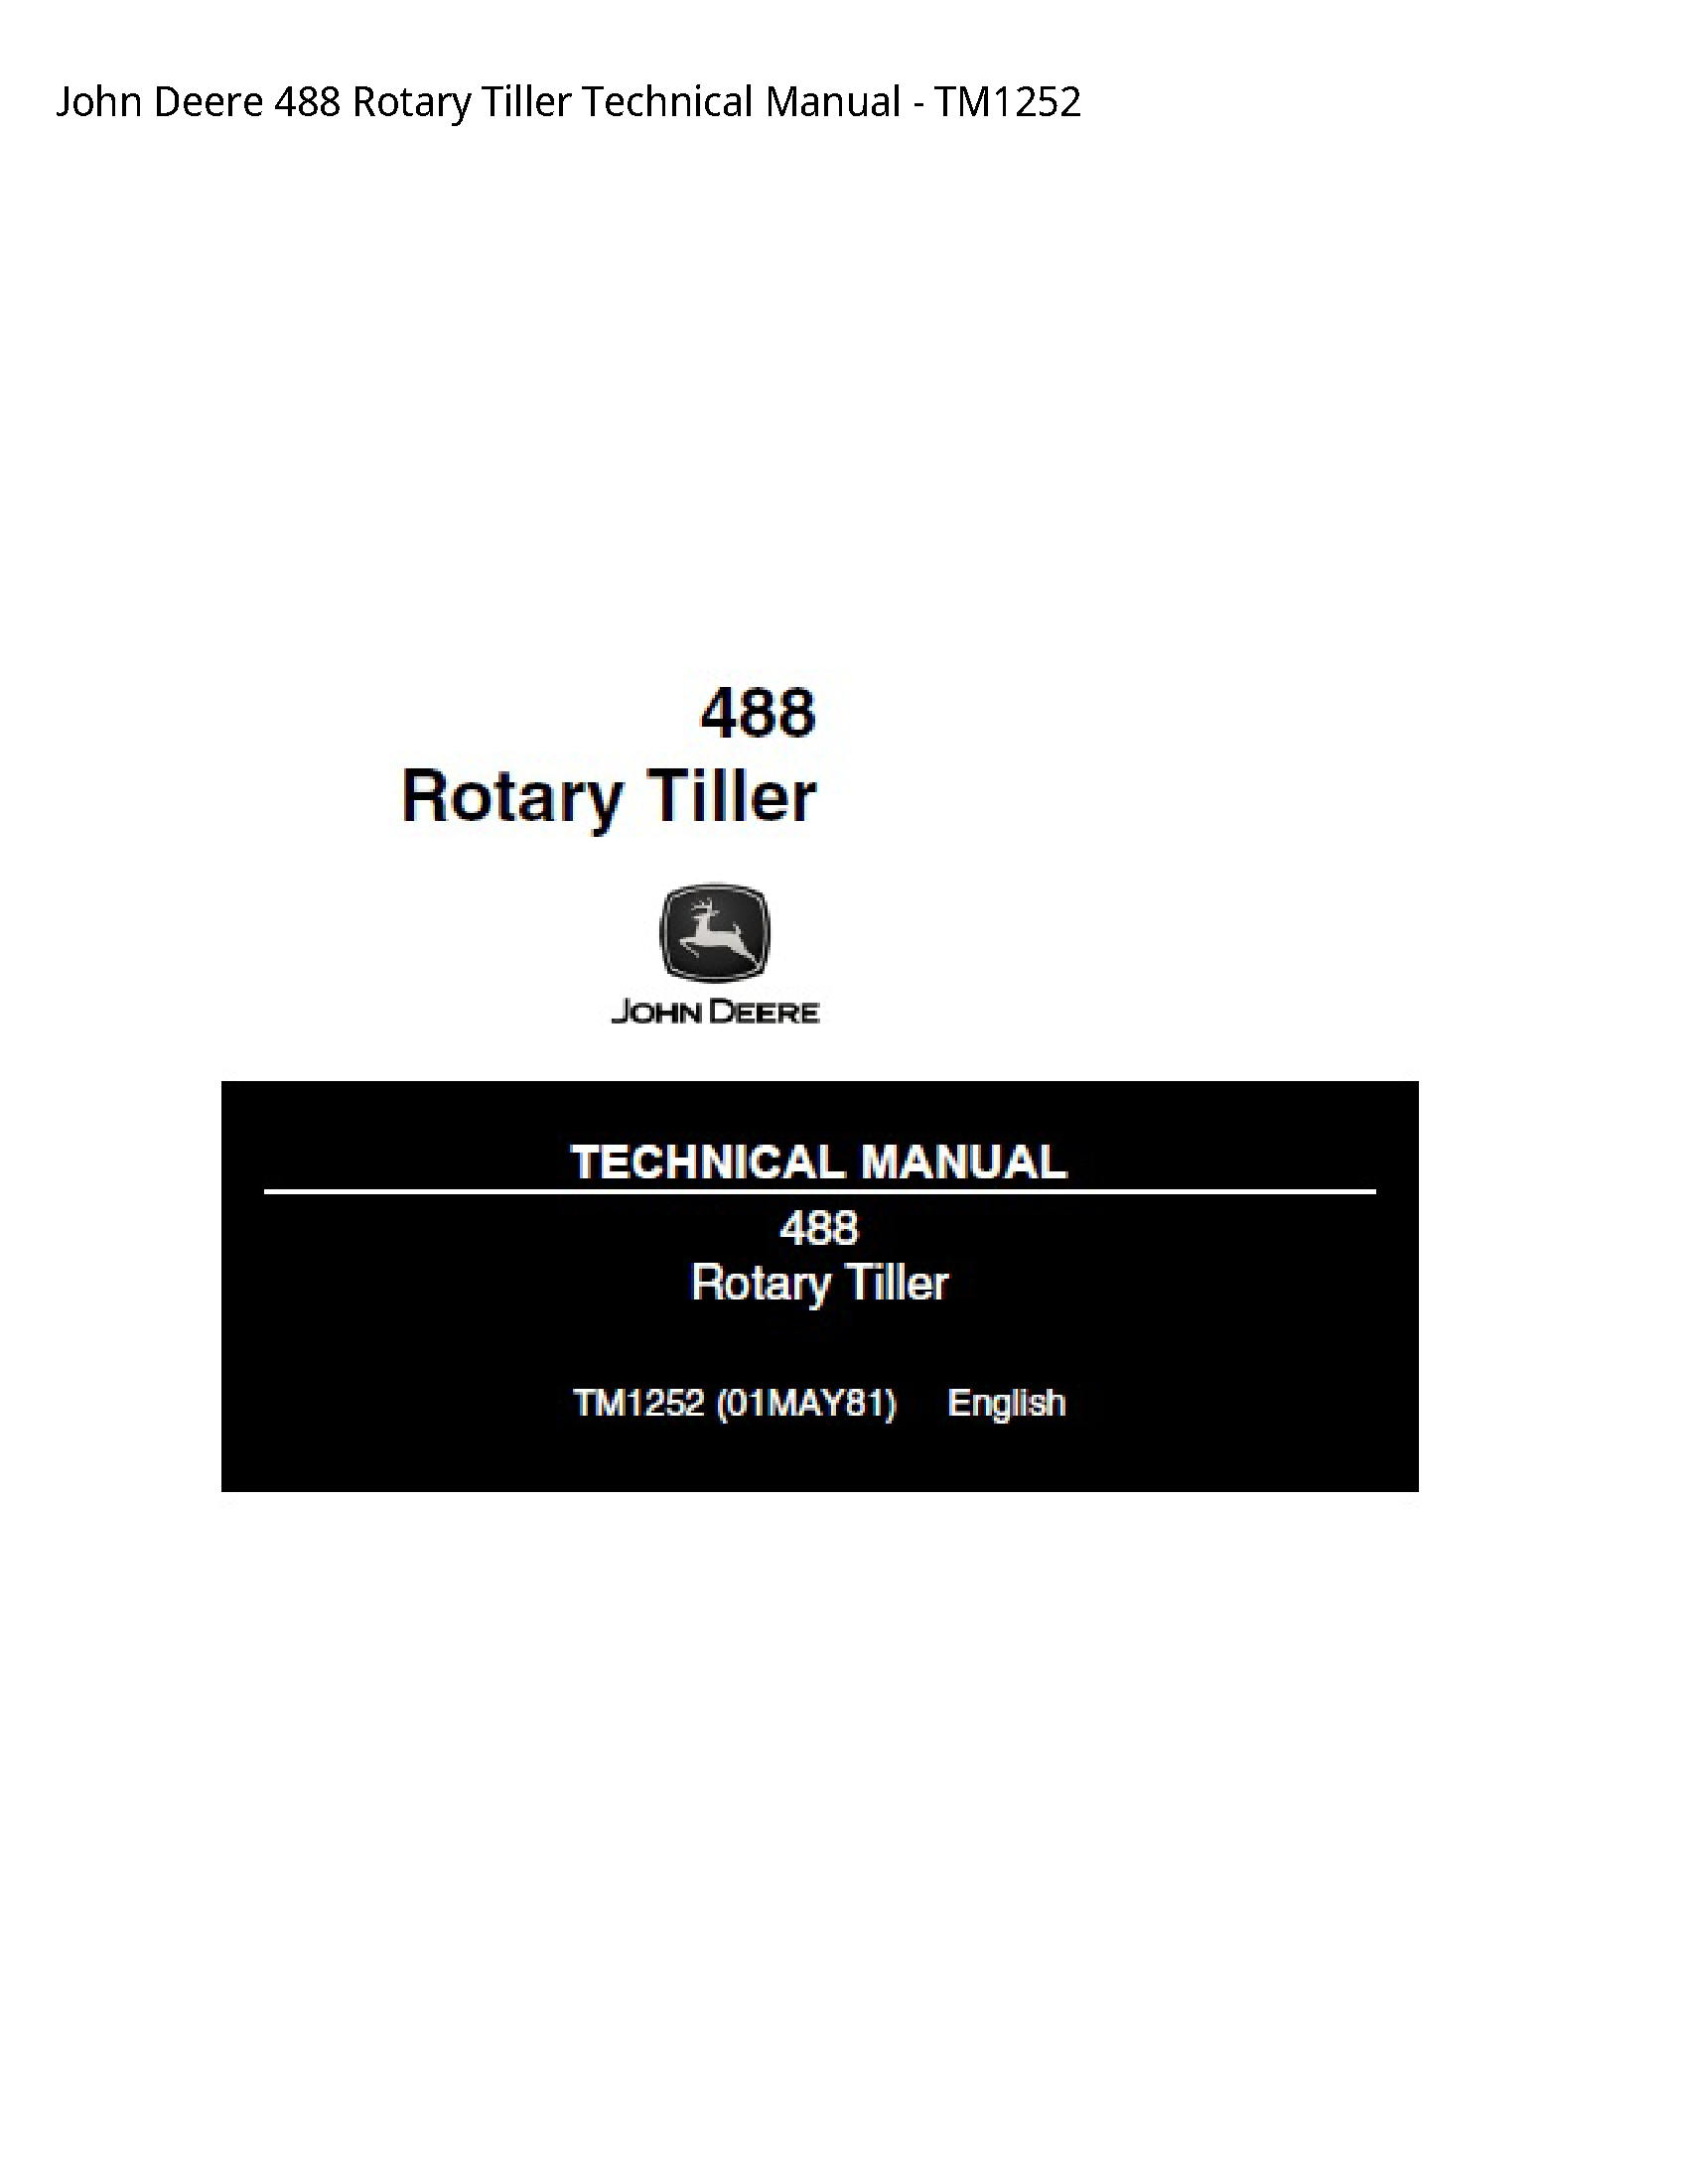 John Deere 488 Rotary Tiller Technical manual